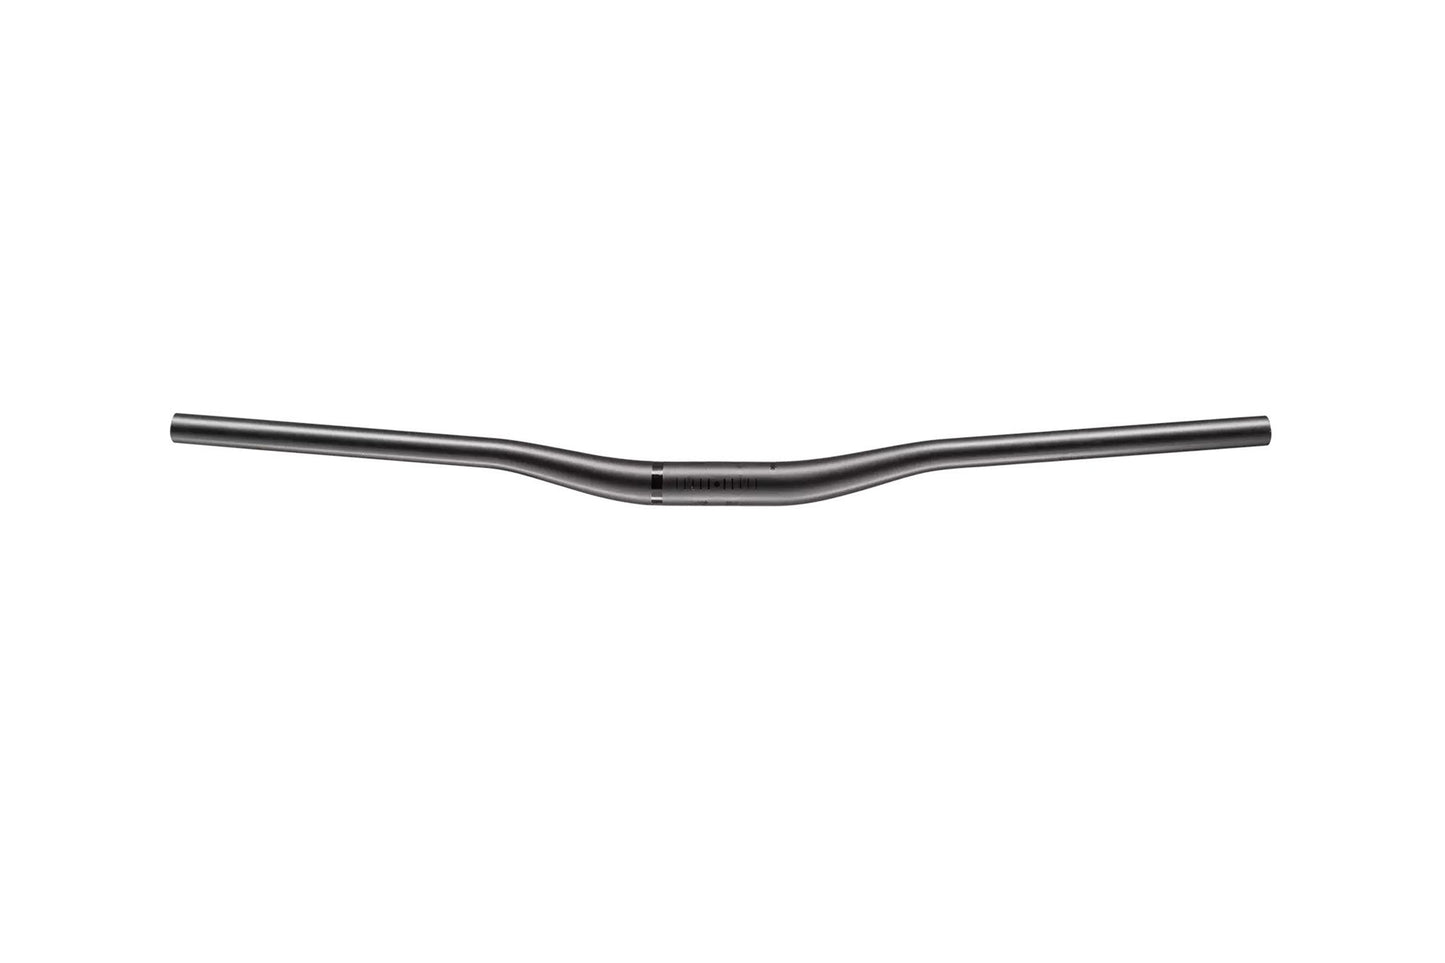 Cannondale C1 Crb Riser Bar 15mm Rise 31.8 x 780mm